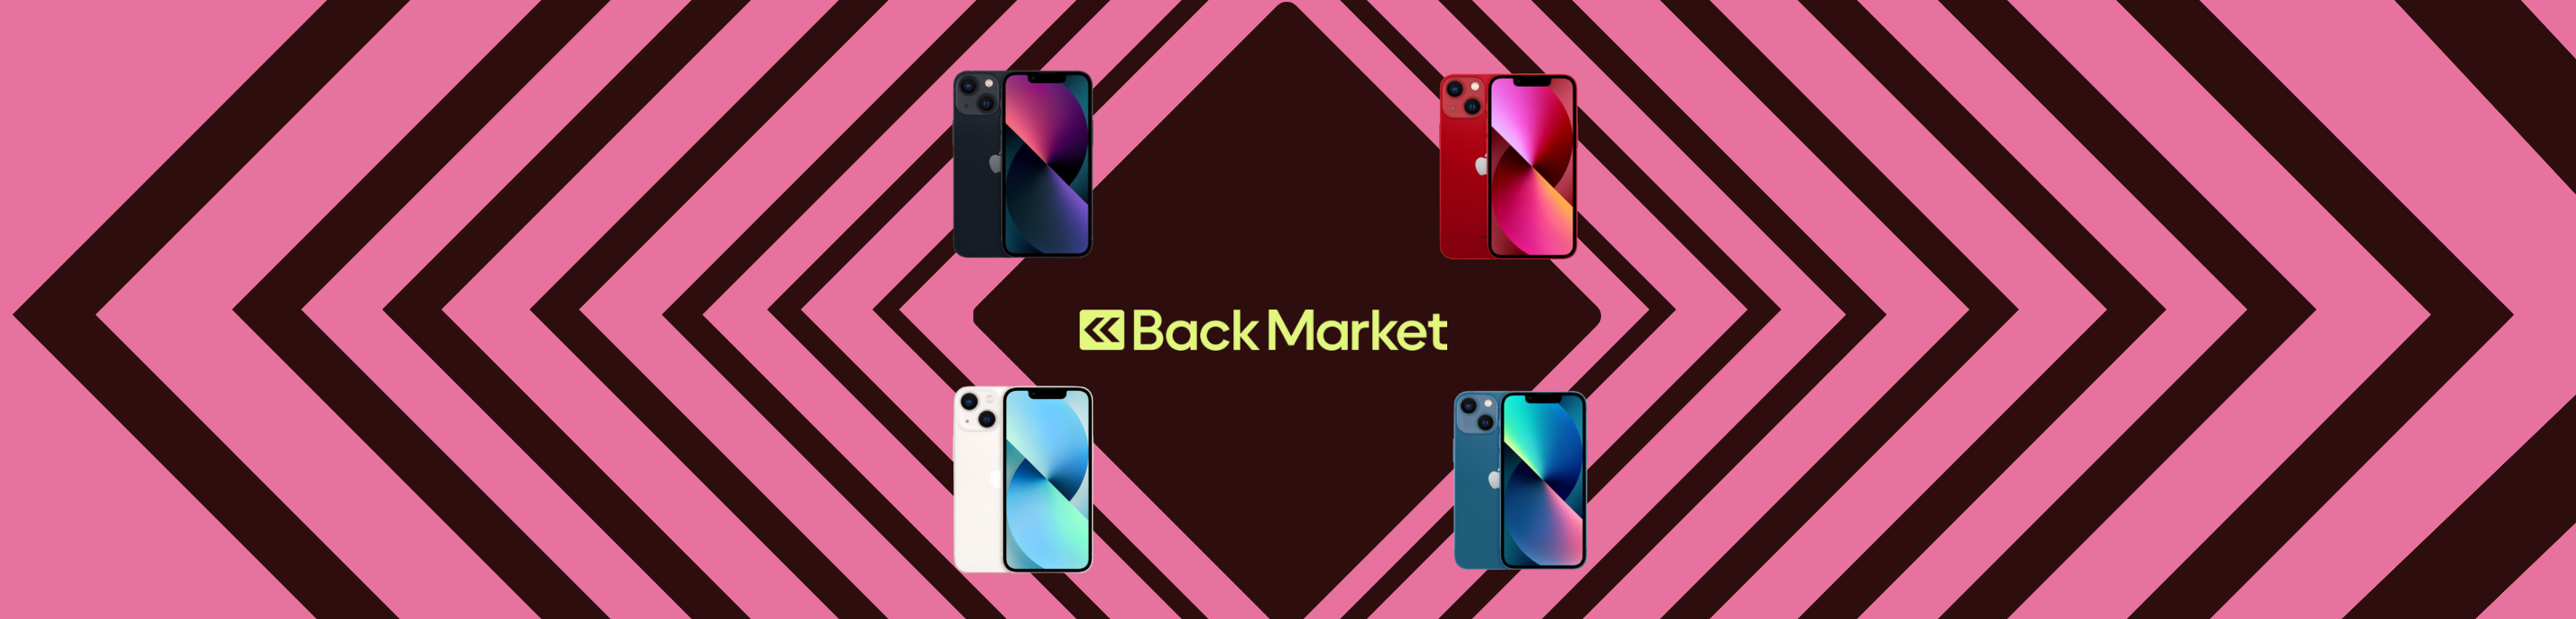 Back market rosa con iPhones